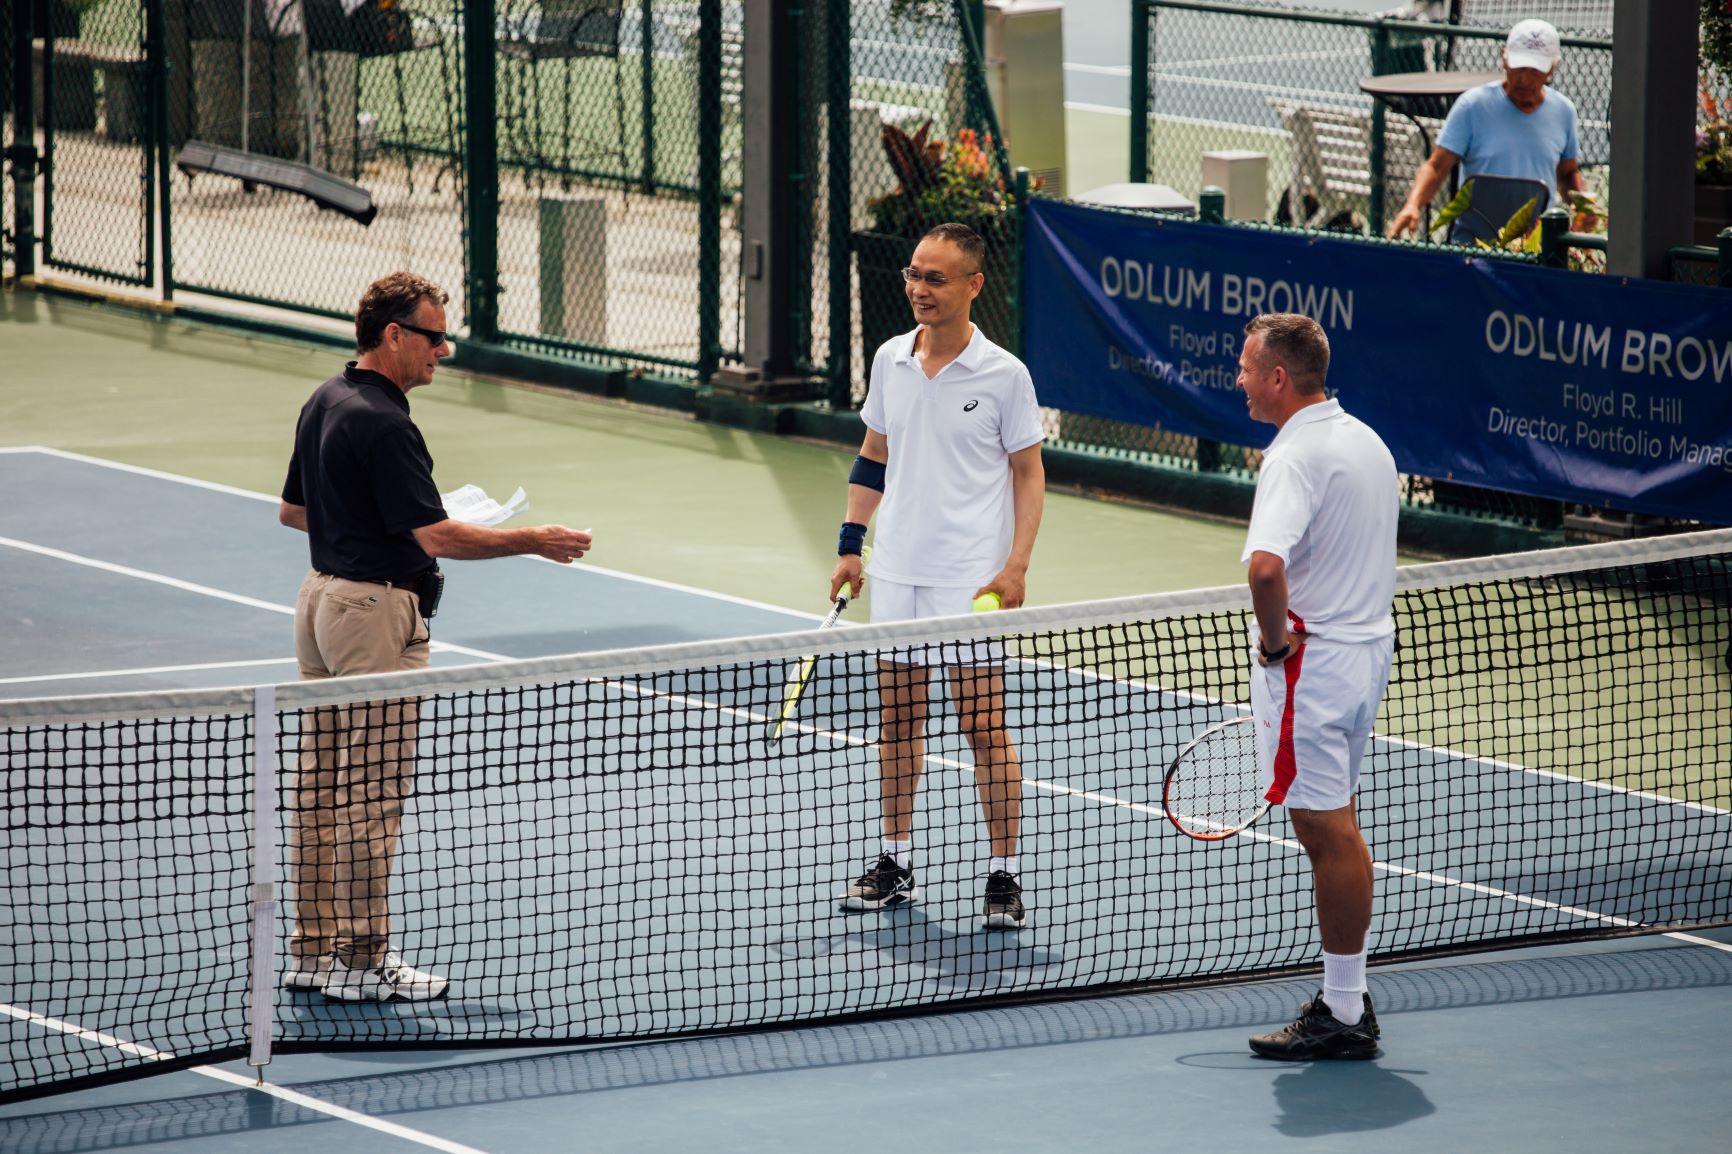 Adult Tennis Tournaments, National Tennis Leagues